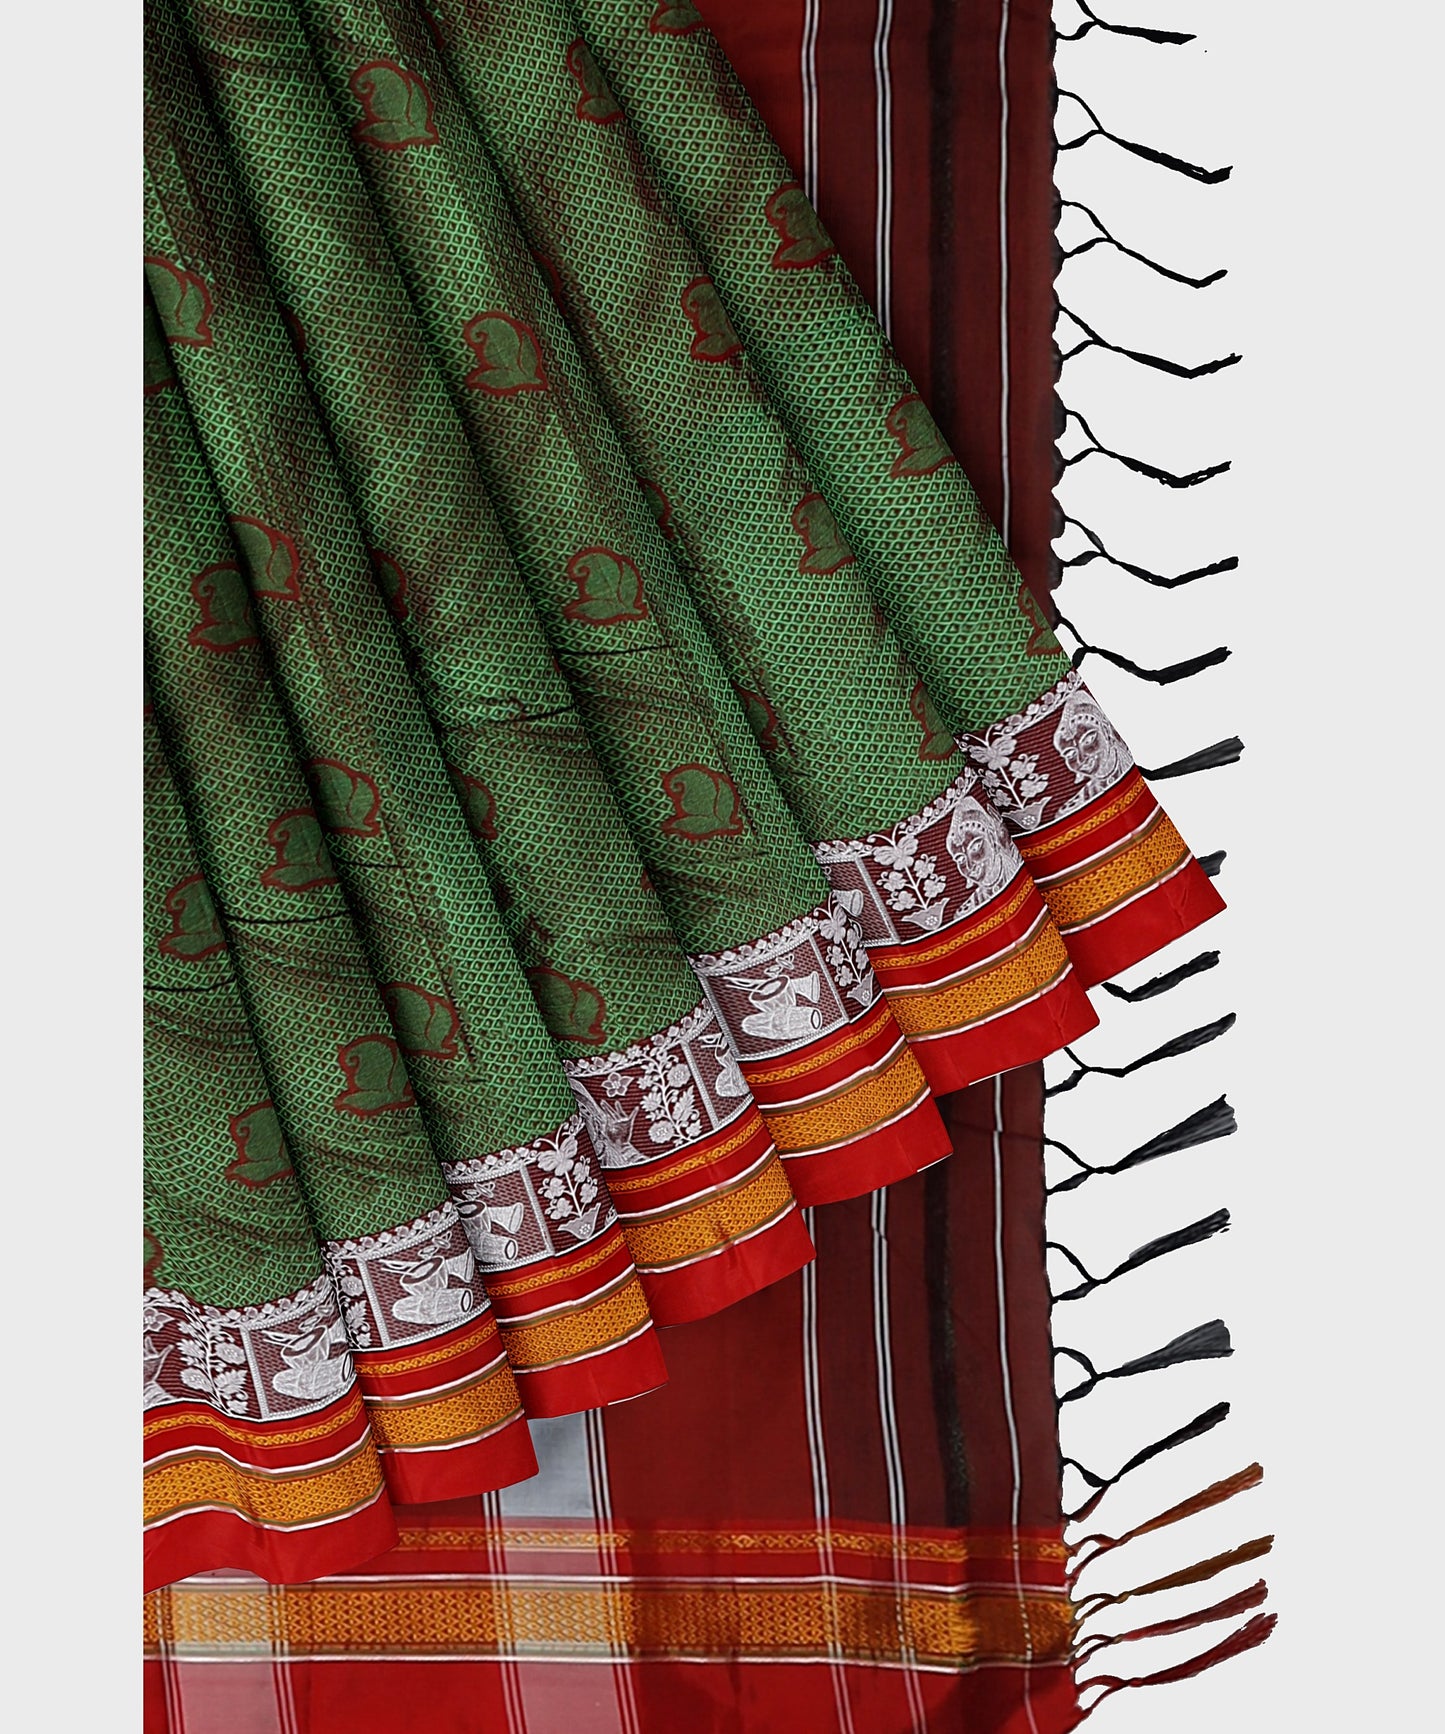 Traditional Khana Saree - Metallic Green Woven Body with Maroon and White Patti Design and Red Border freeshipping - Shreni Samudaya